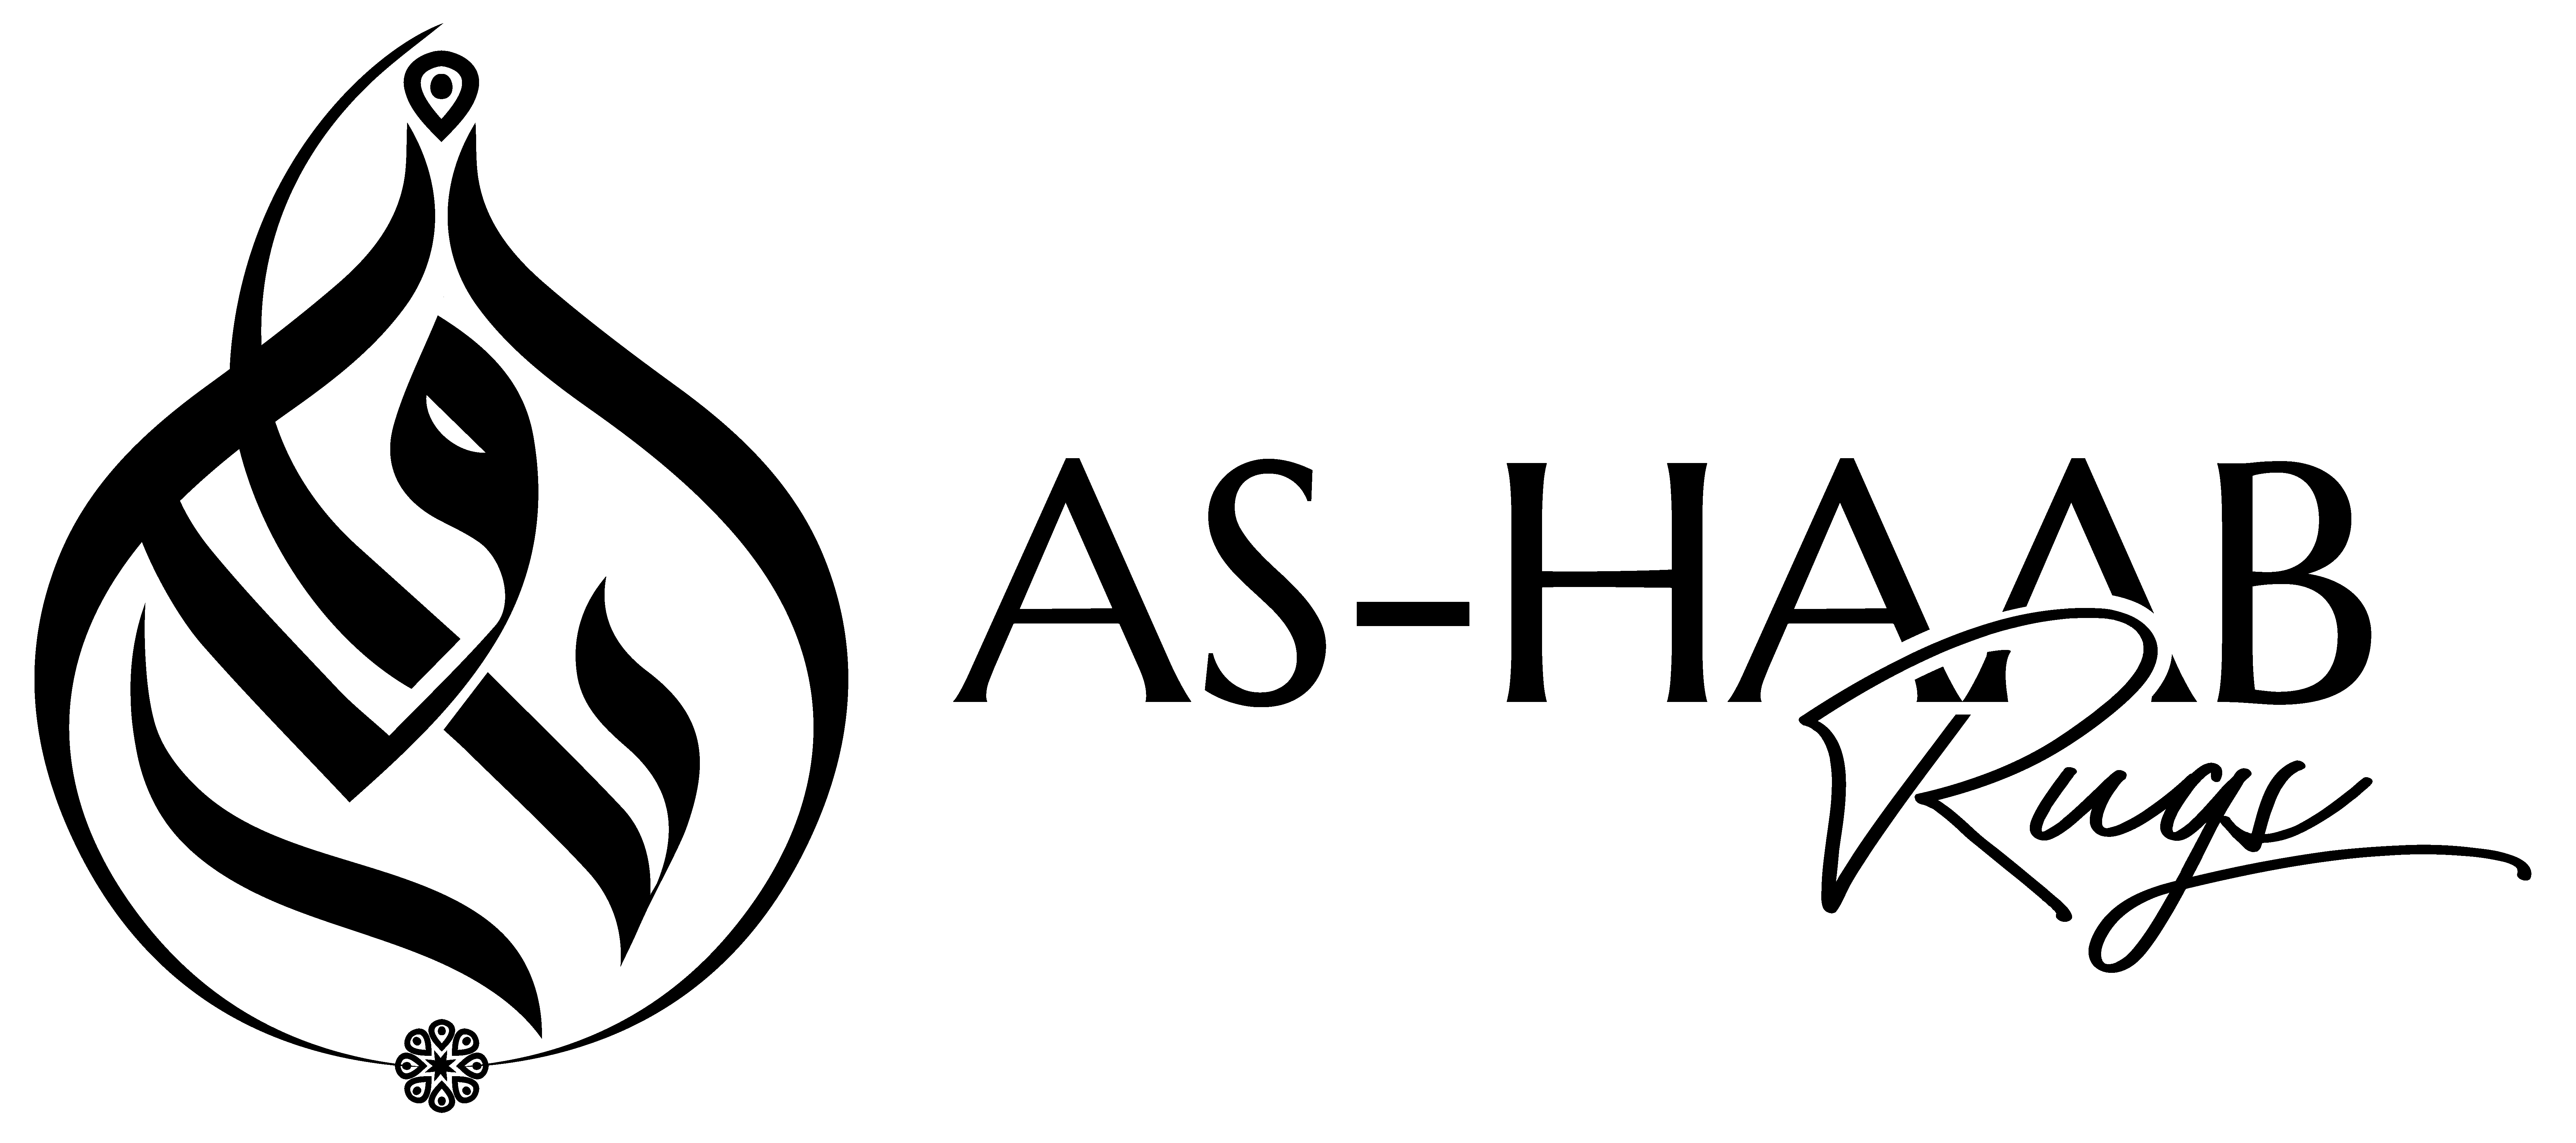 as-haab-logo